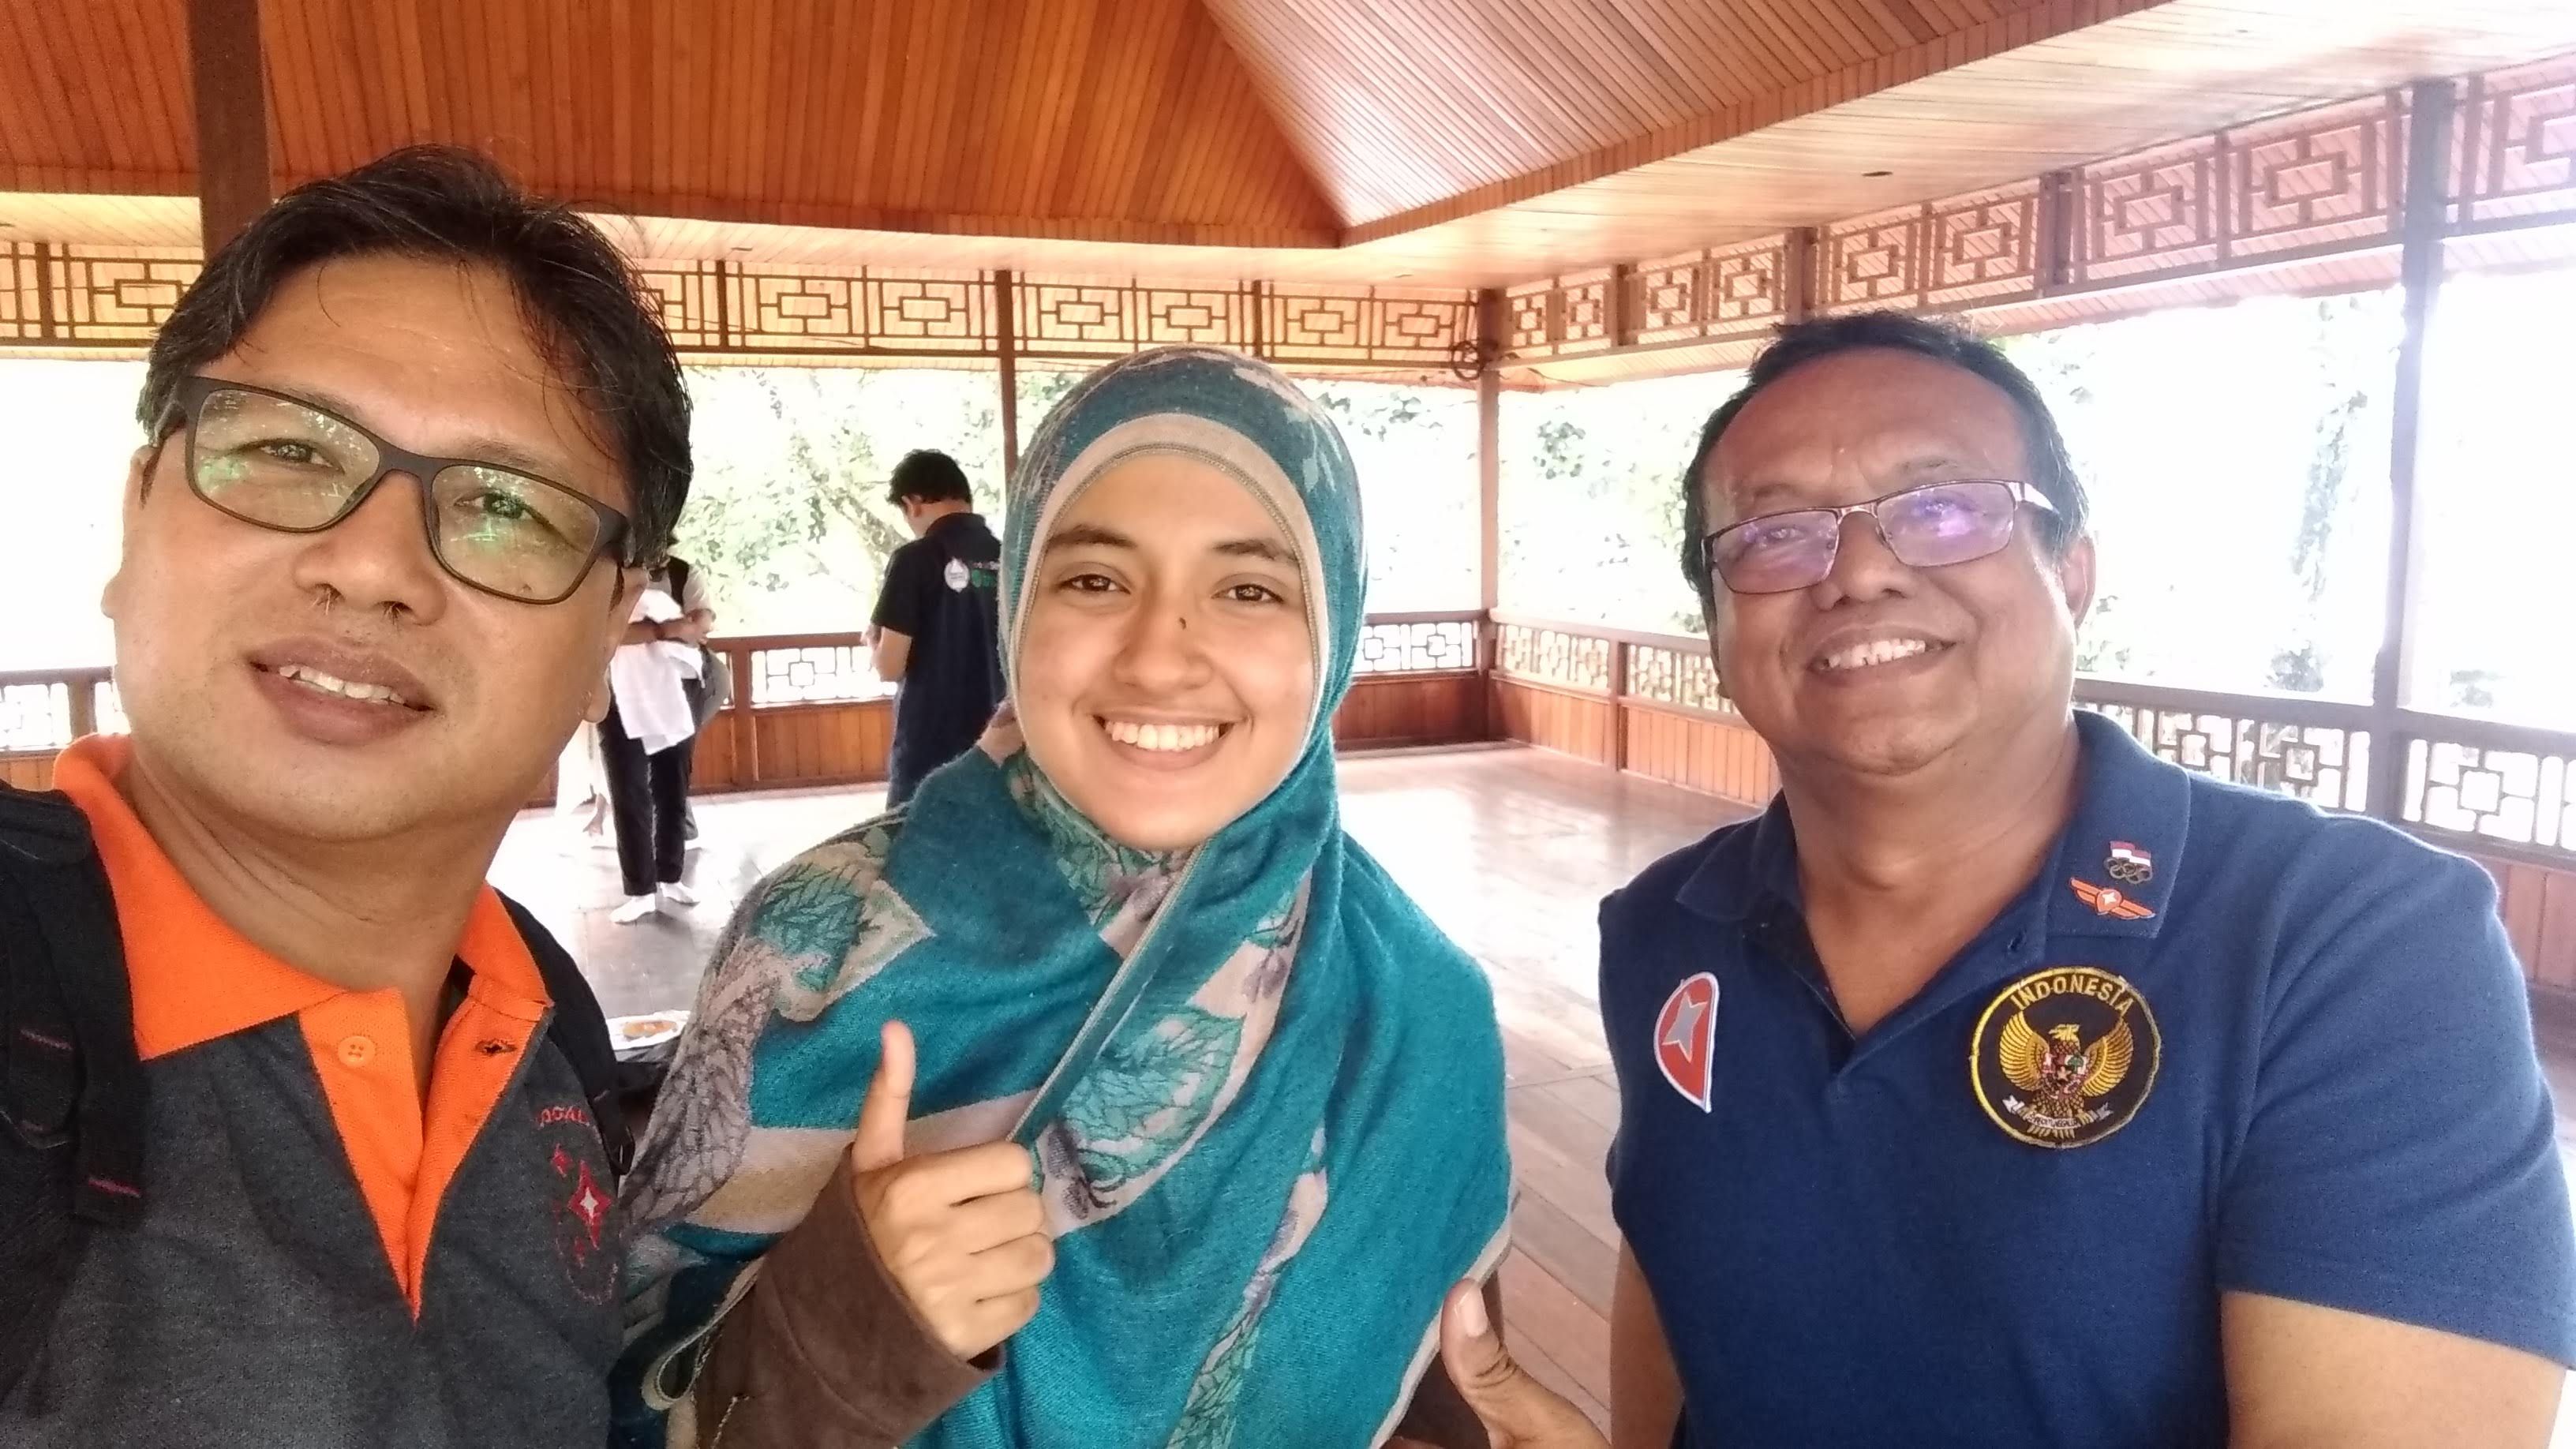 A photo of me (center) along with Mr. Suhandi Widjaja (left) and Mr. FX Budi W (right) during our meet-up in Taman Wisata Matahari, November 2018. (Credi to Mr. Suhandi Widjaja)